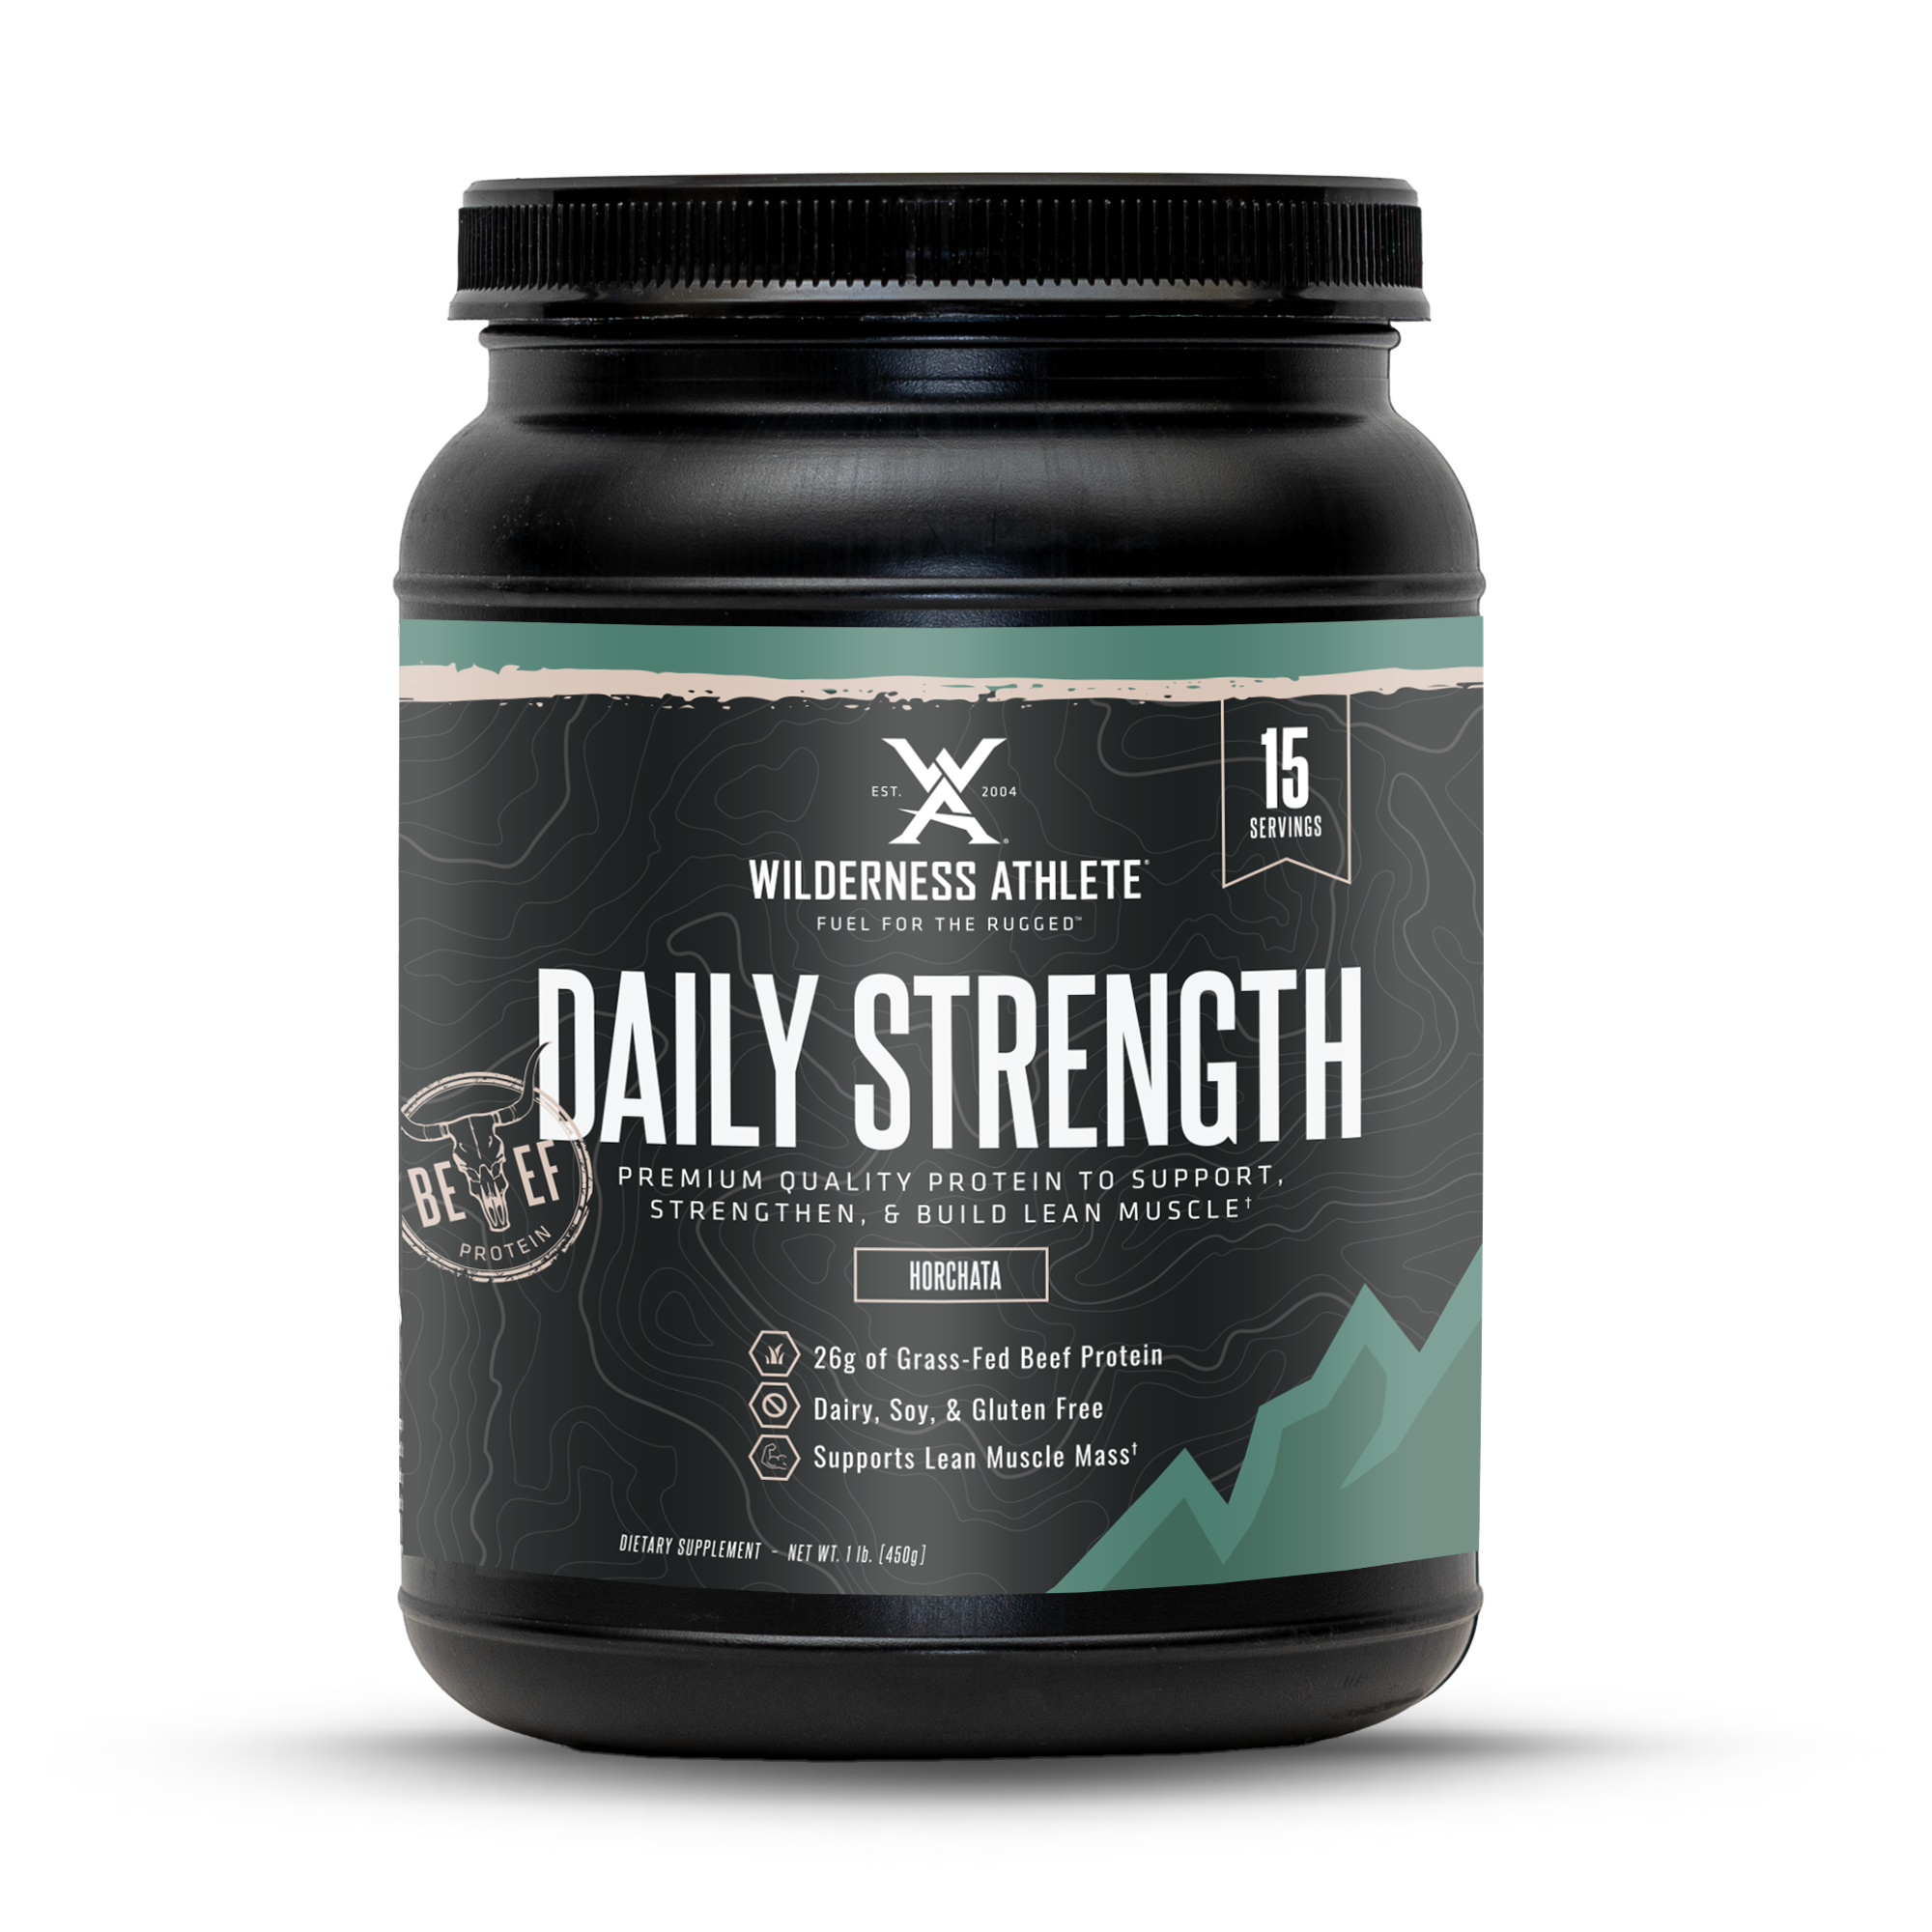 Daily Strength Protein Powder